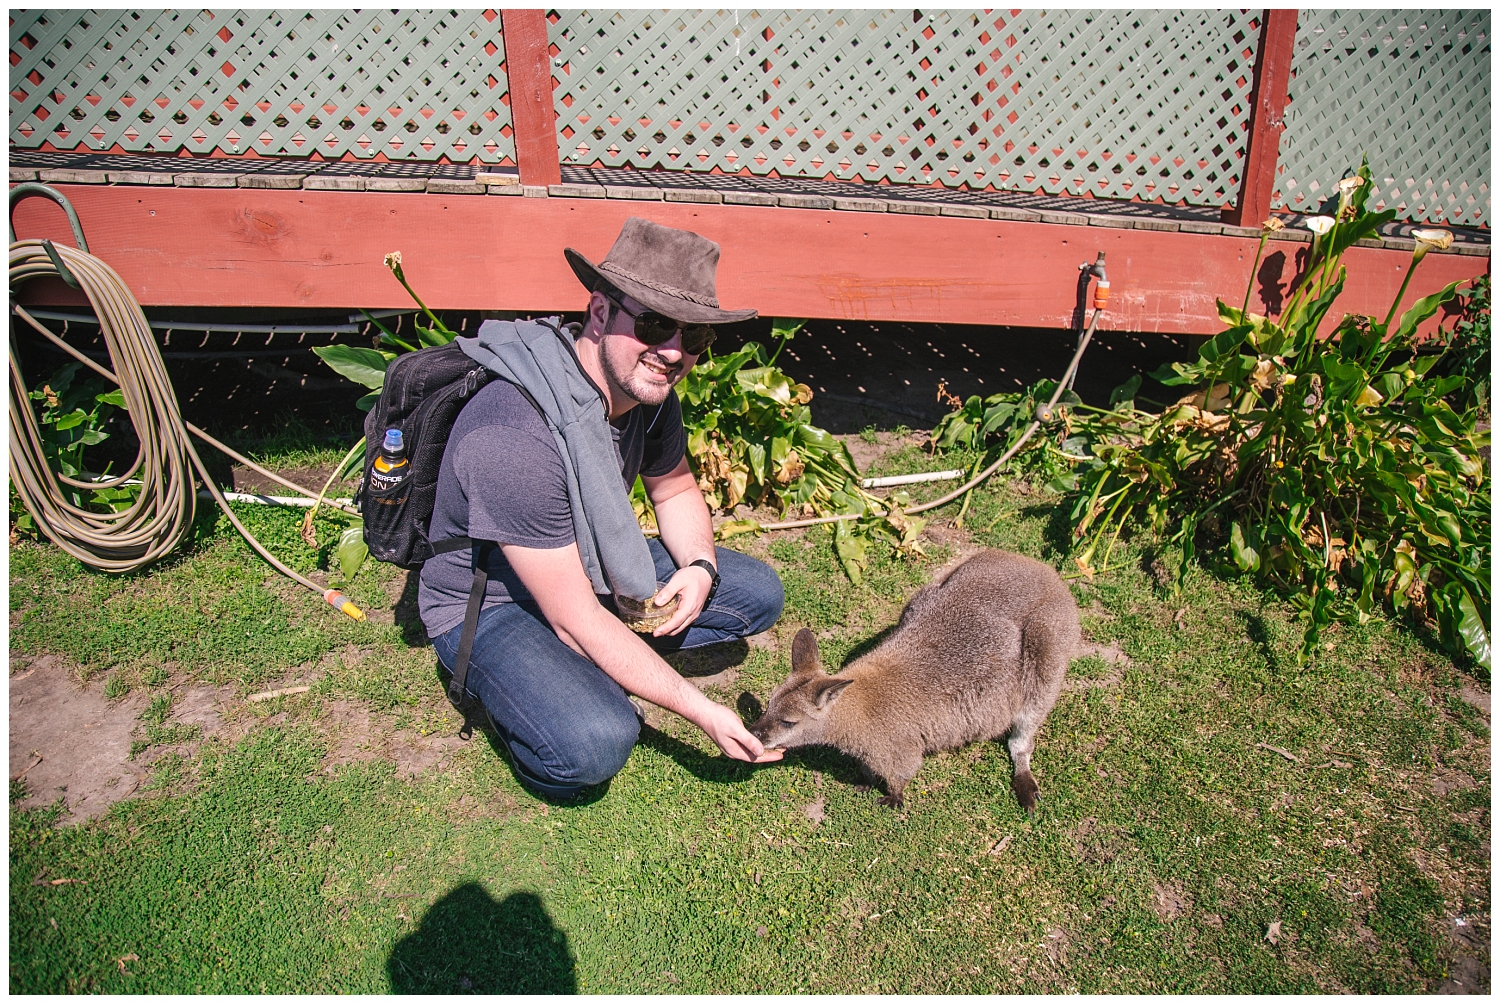 Maru Koala and Animal Park on Phillip Island | 3 Days in Melbourne, Australia